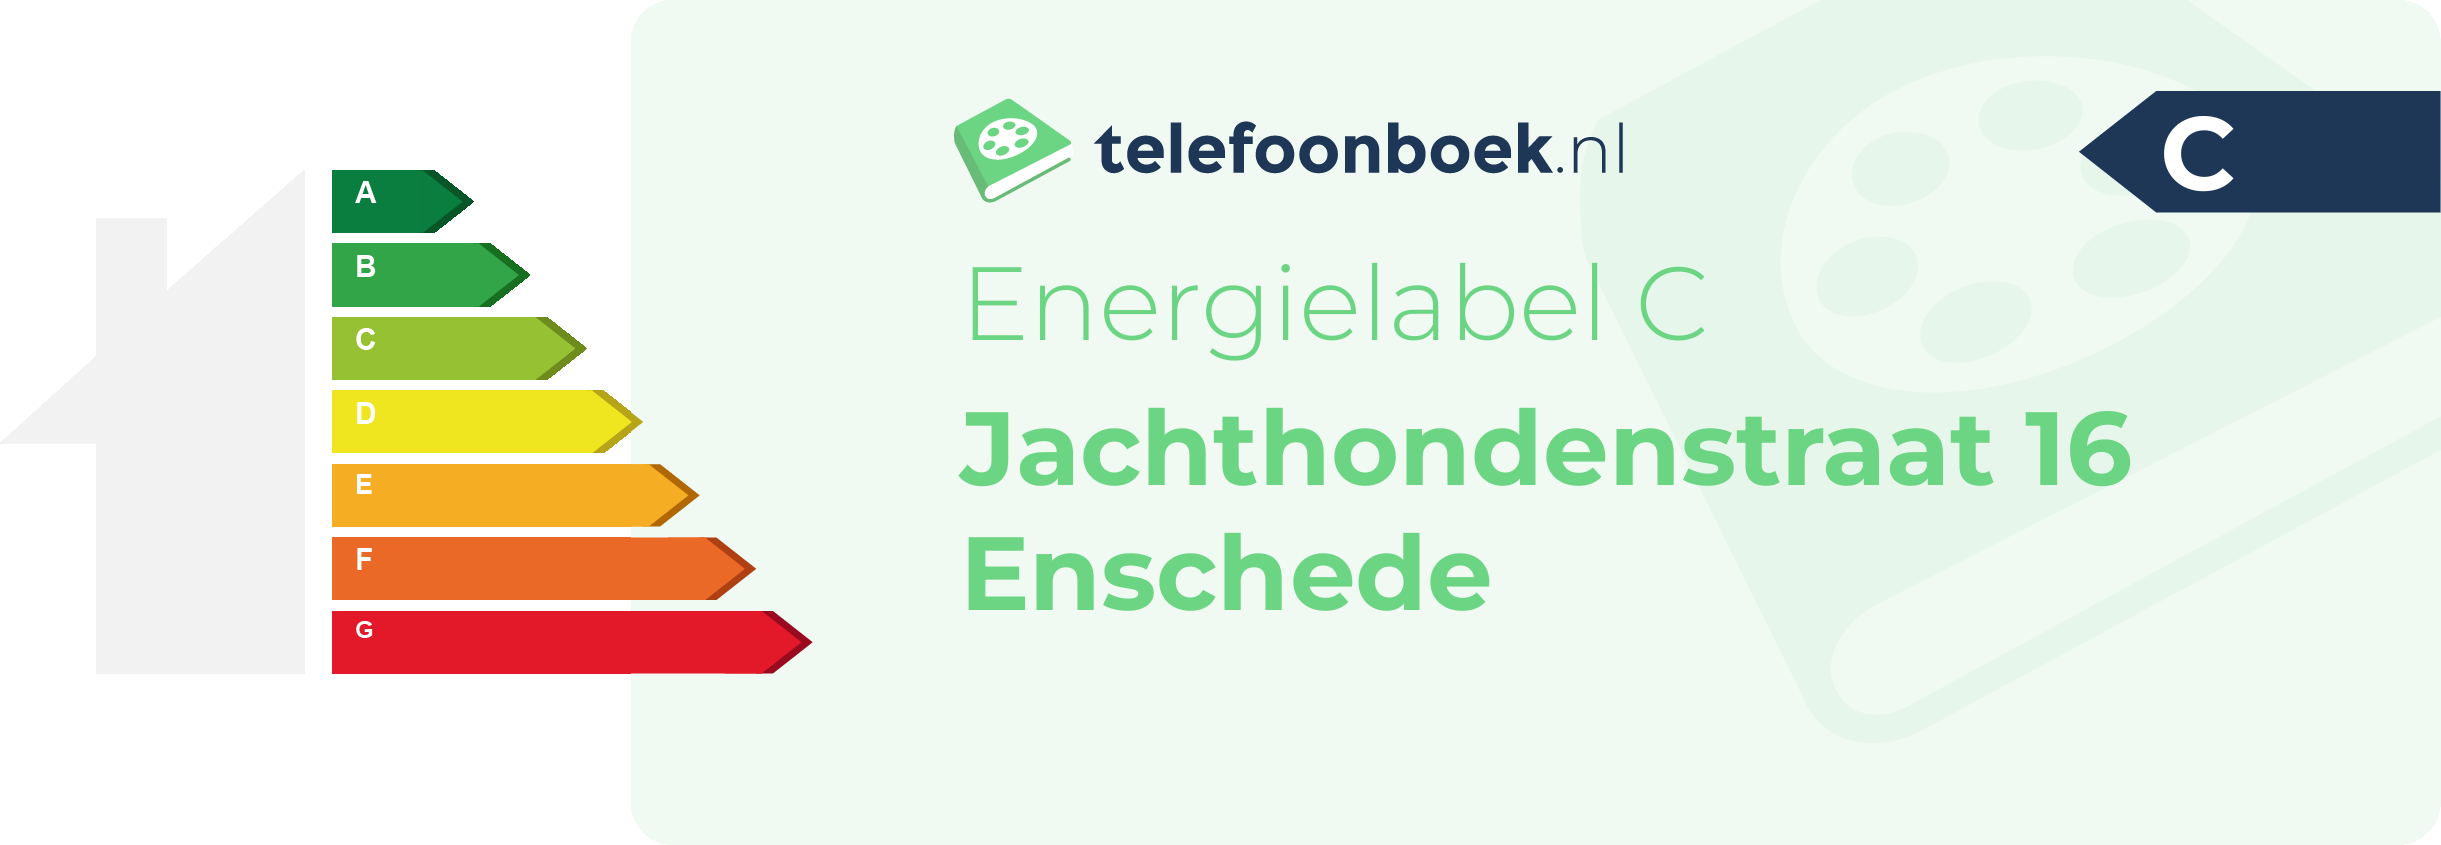 Energielabel Jachthondenstraat 16 Enschede